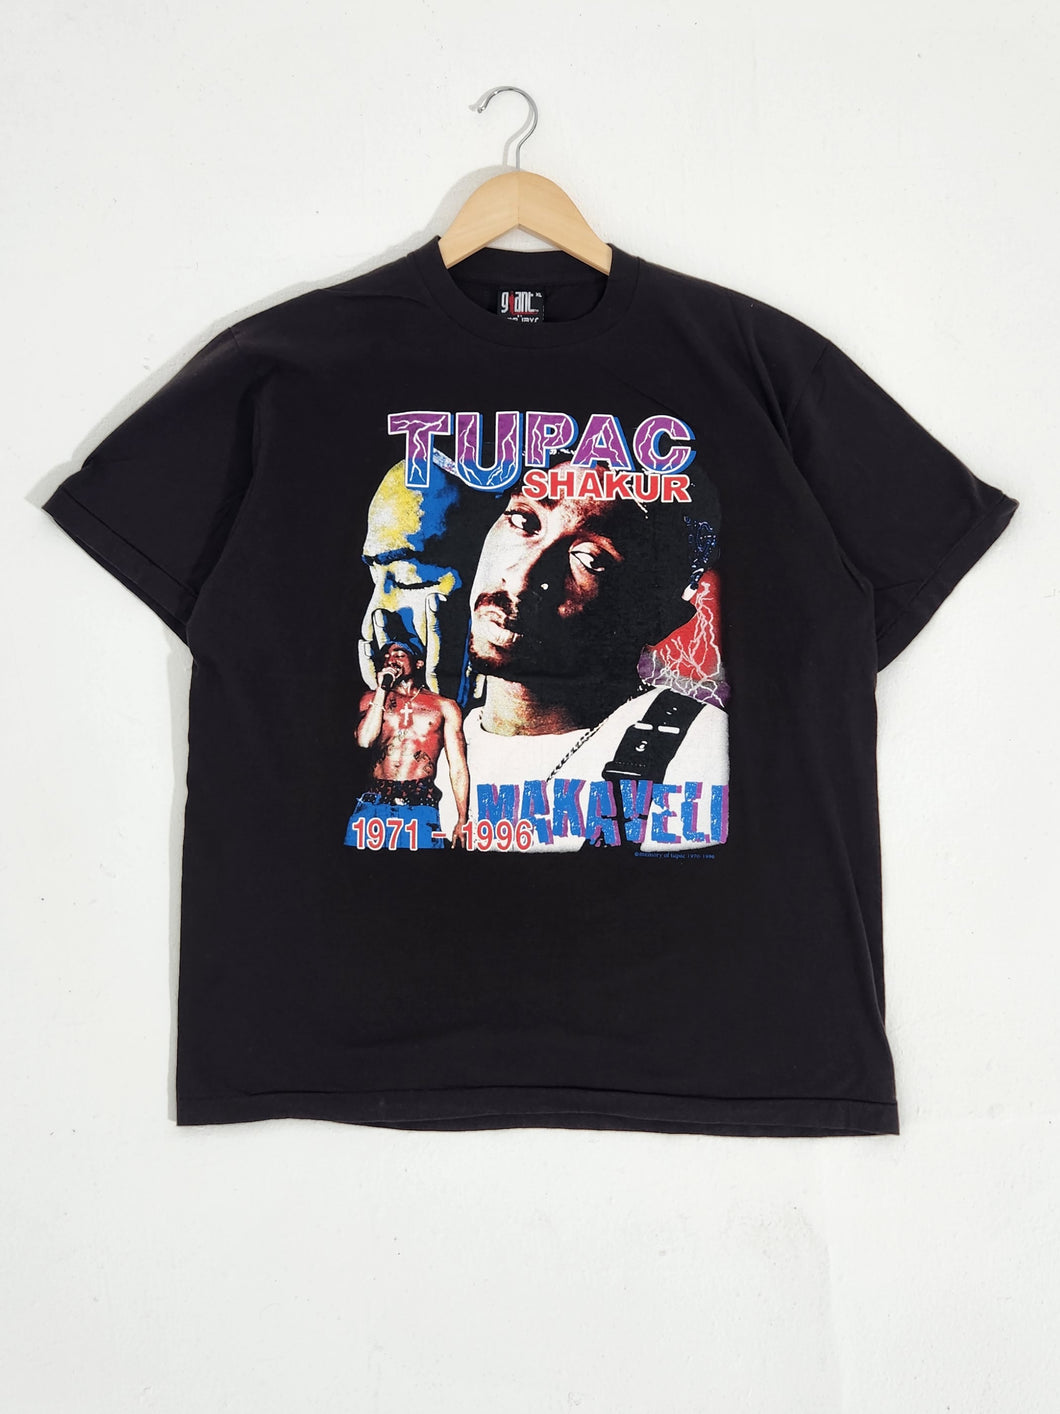 Vintage 1990's Bootleg AOP Tupac Shakur T-Shirt Sz. XL